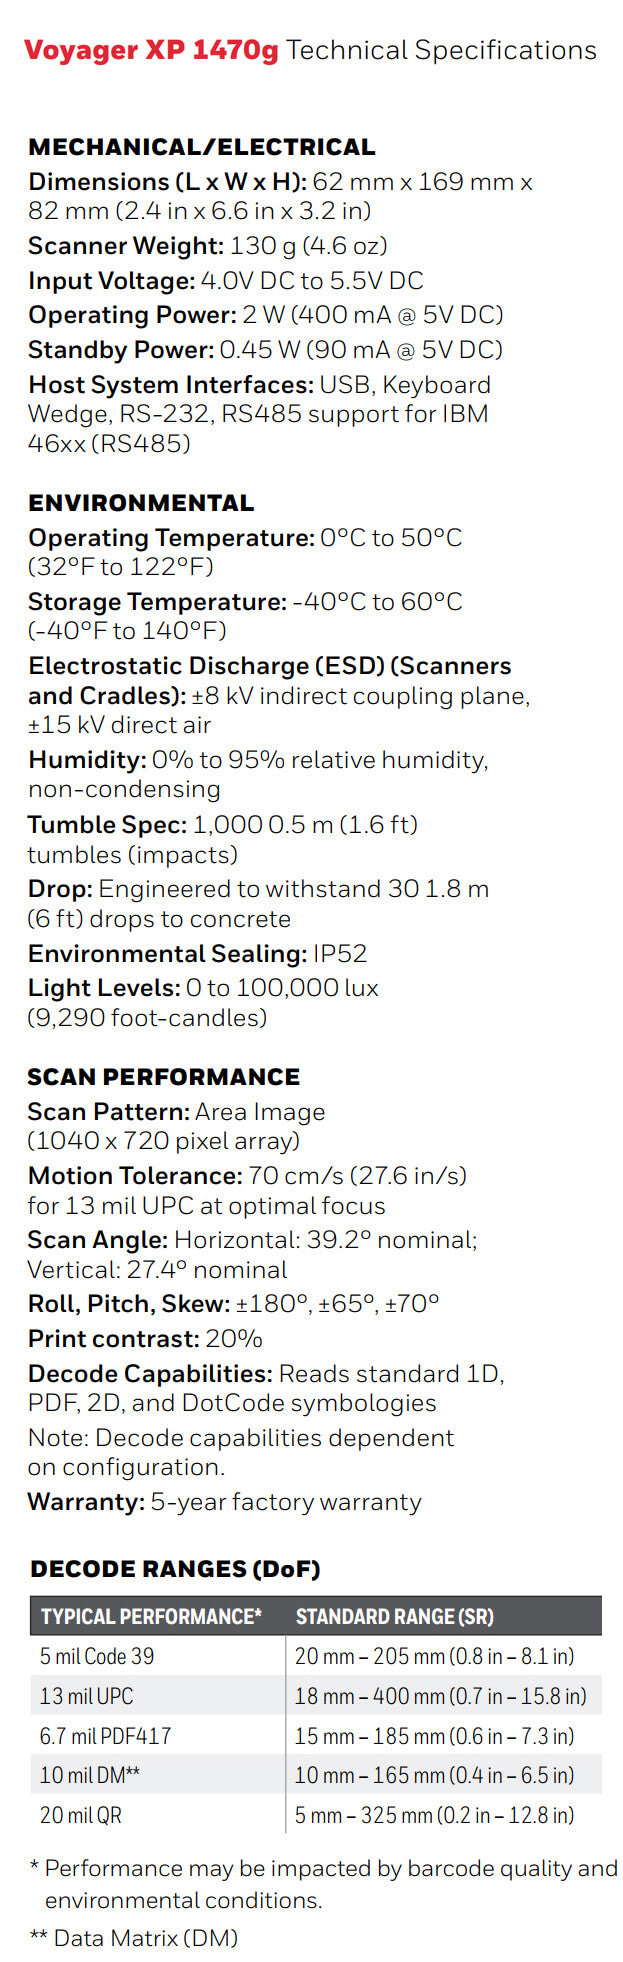 Honeywell Voyager XP 1470g data sheet